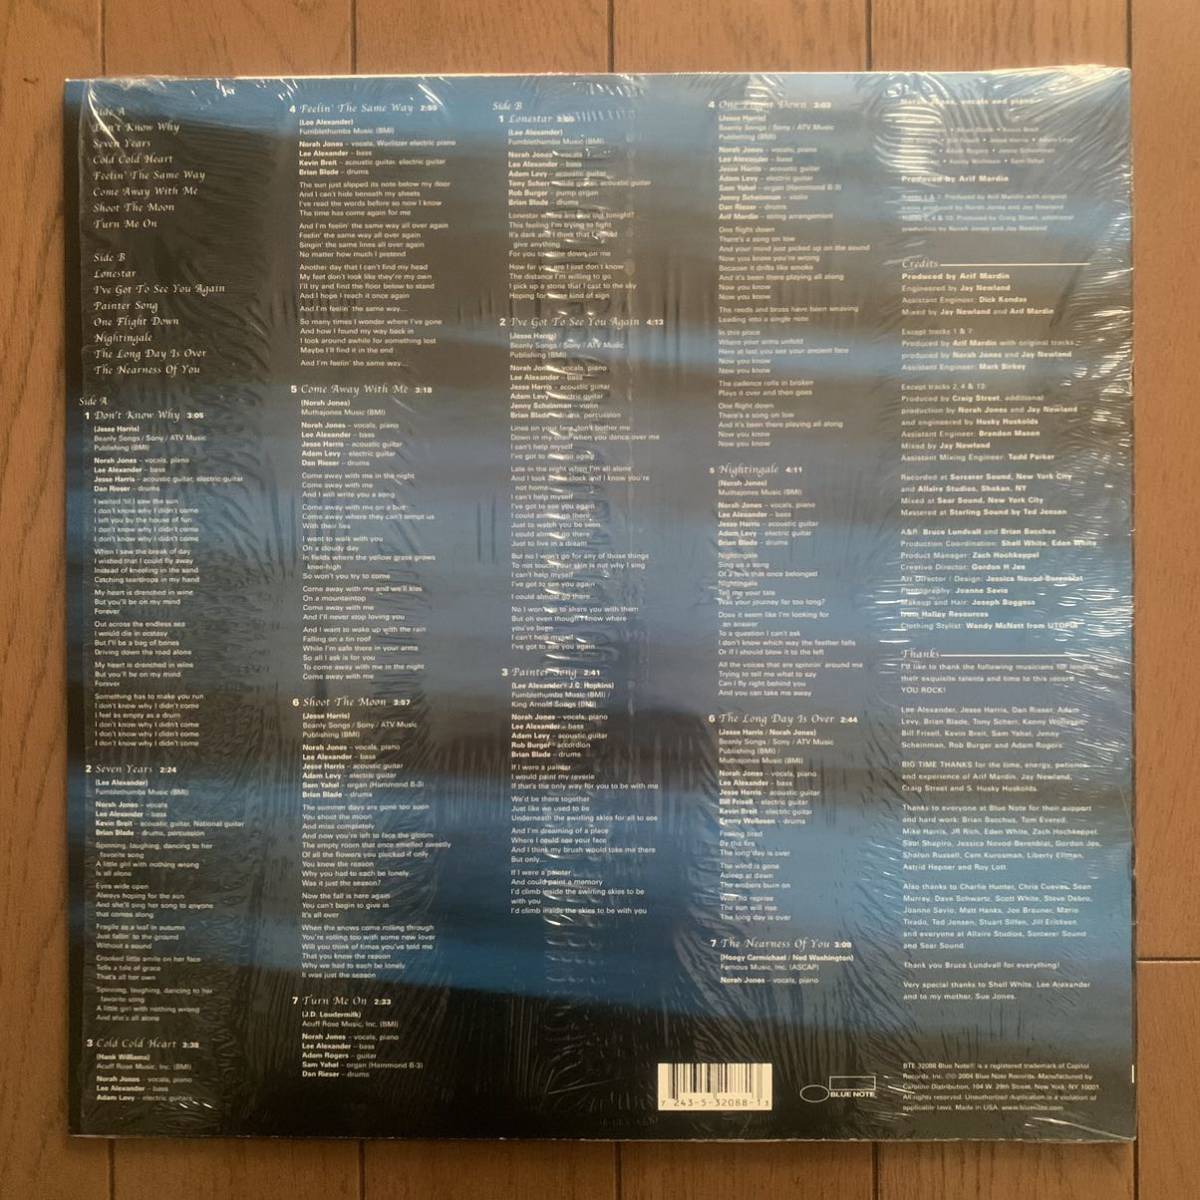 Norah Jones / Come Away With Me (Blue Note) US盤 - シュリンク付 - 美品_画像2